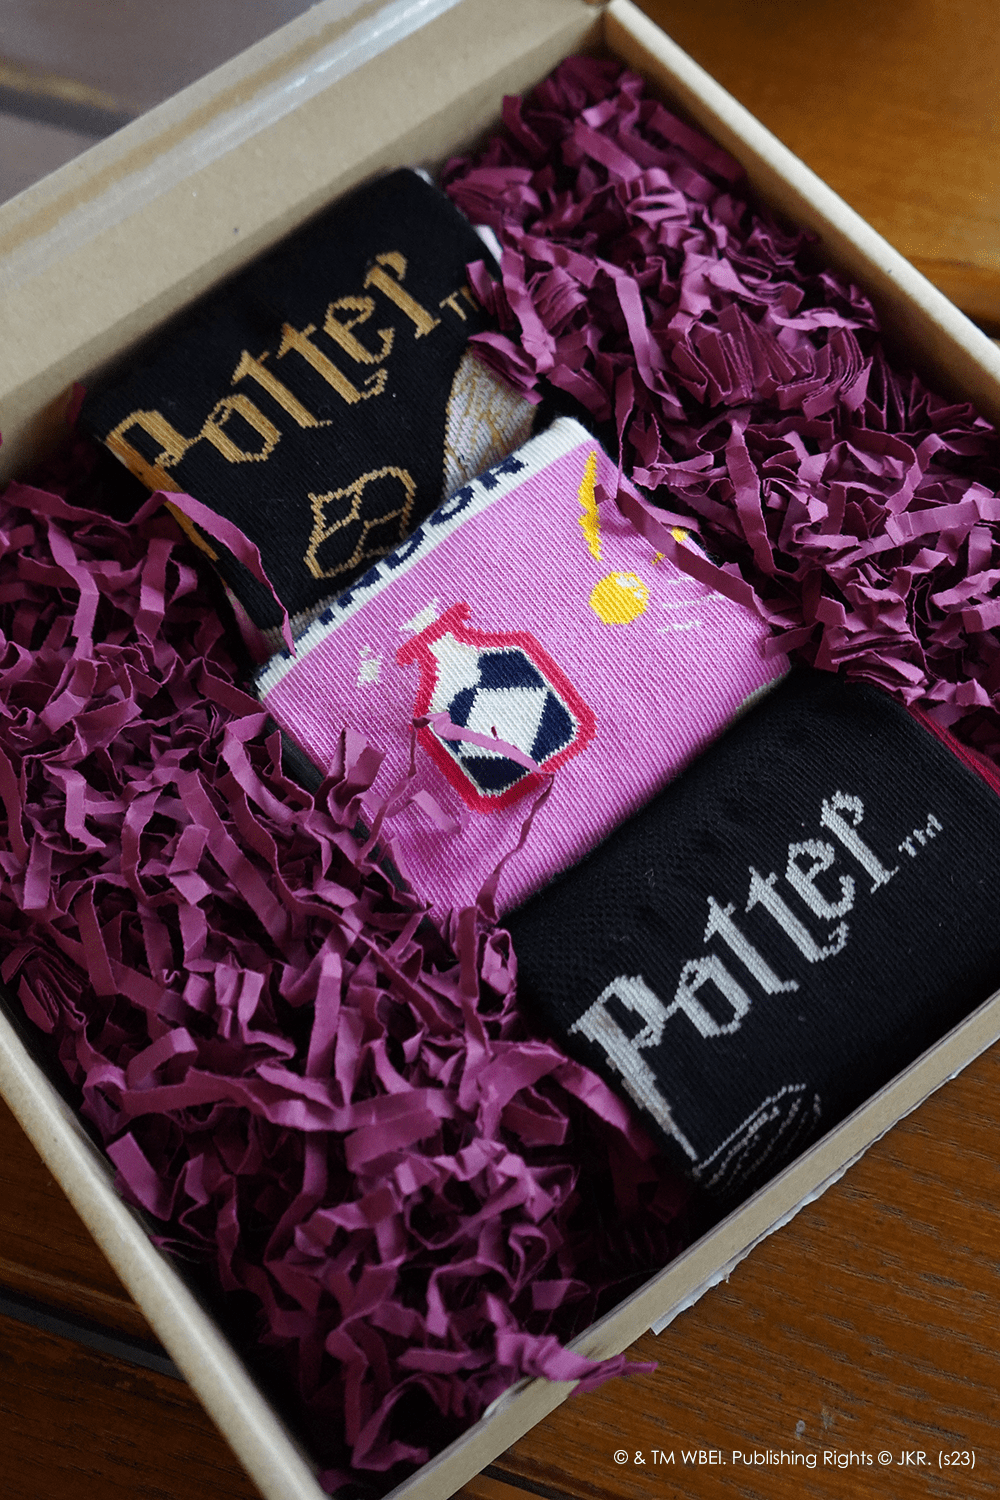 Set of 3 pairs of Harry Potter socks